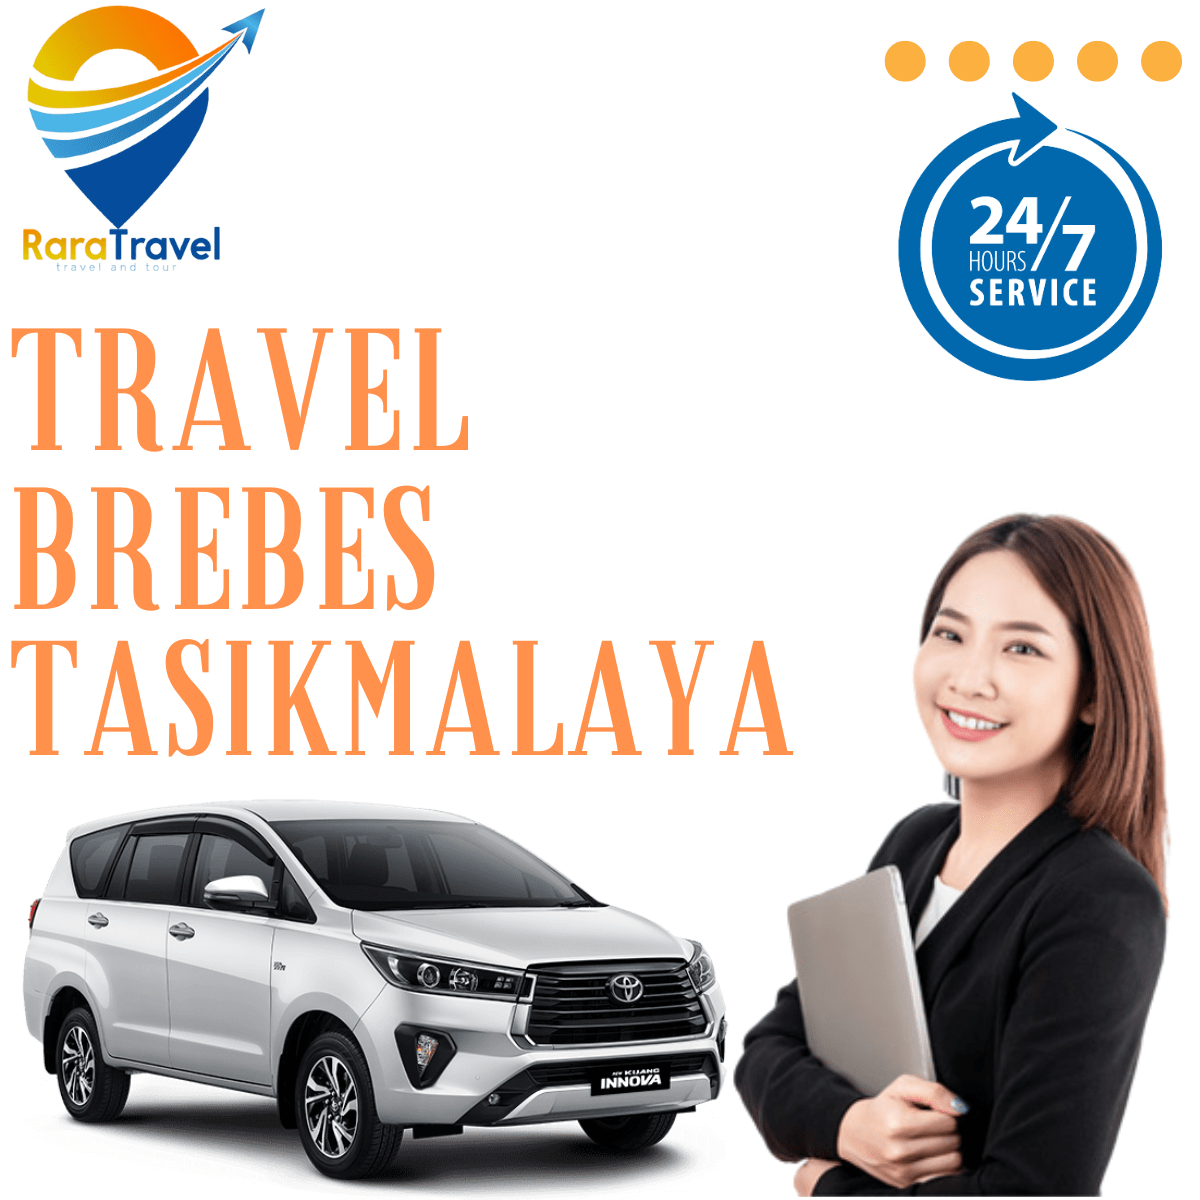 Travel Brebes Tasikmalaya - RARATRAVEL.ID